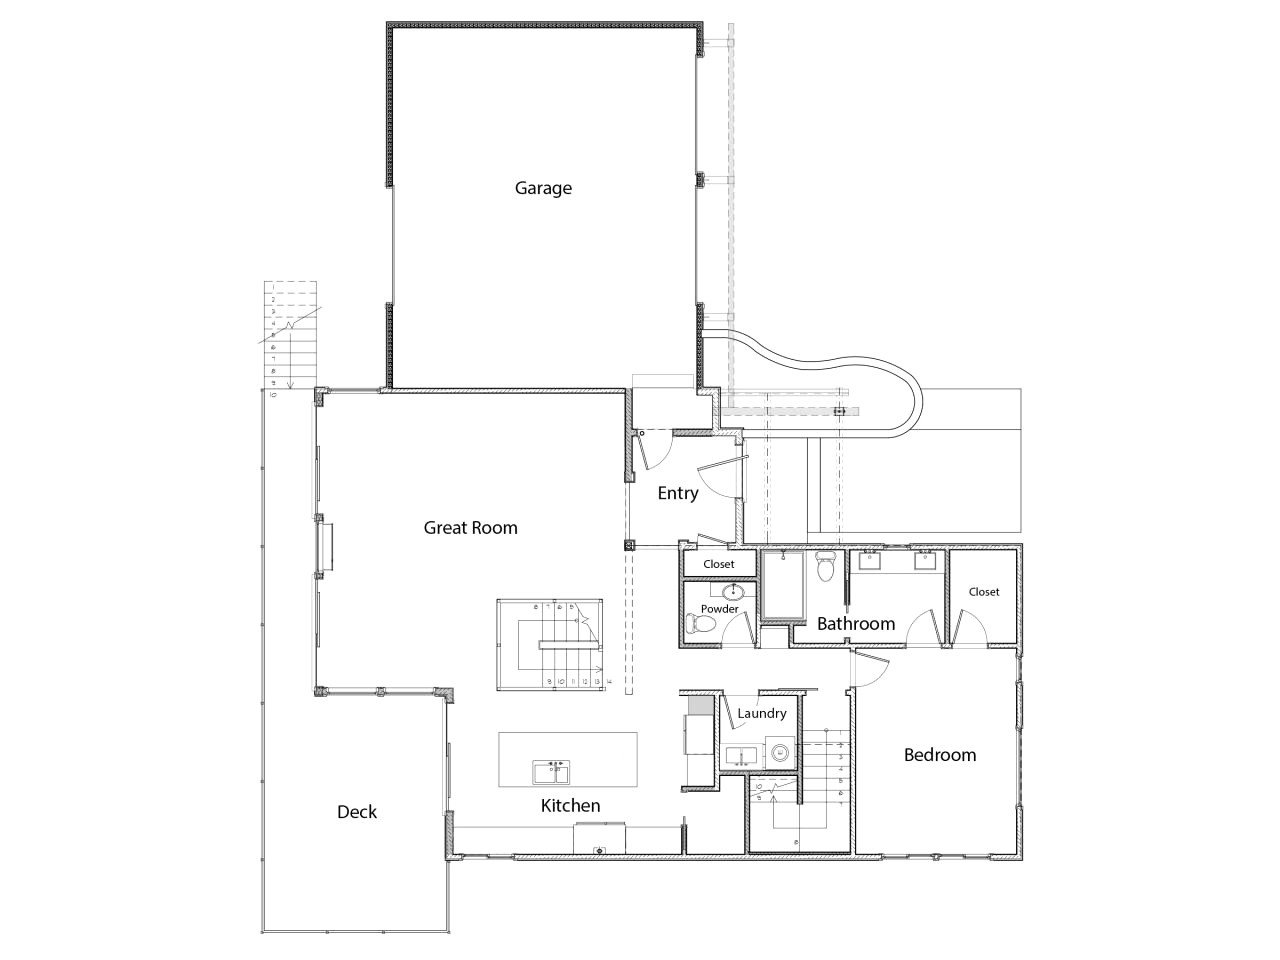 2016 hgtv dream home floor plan